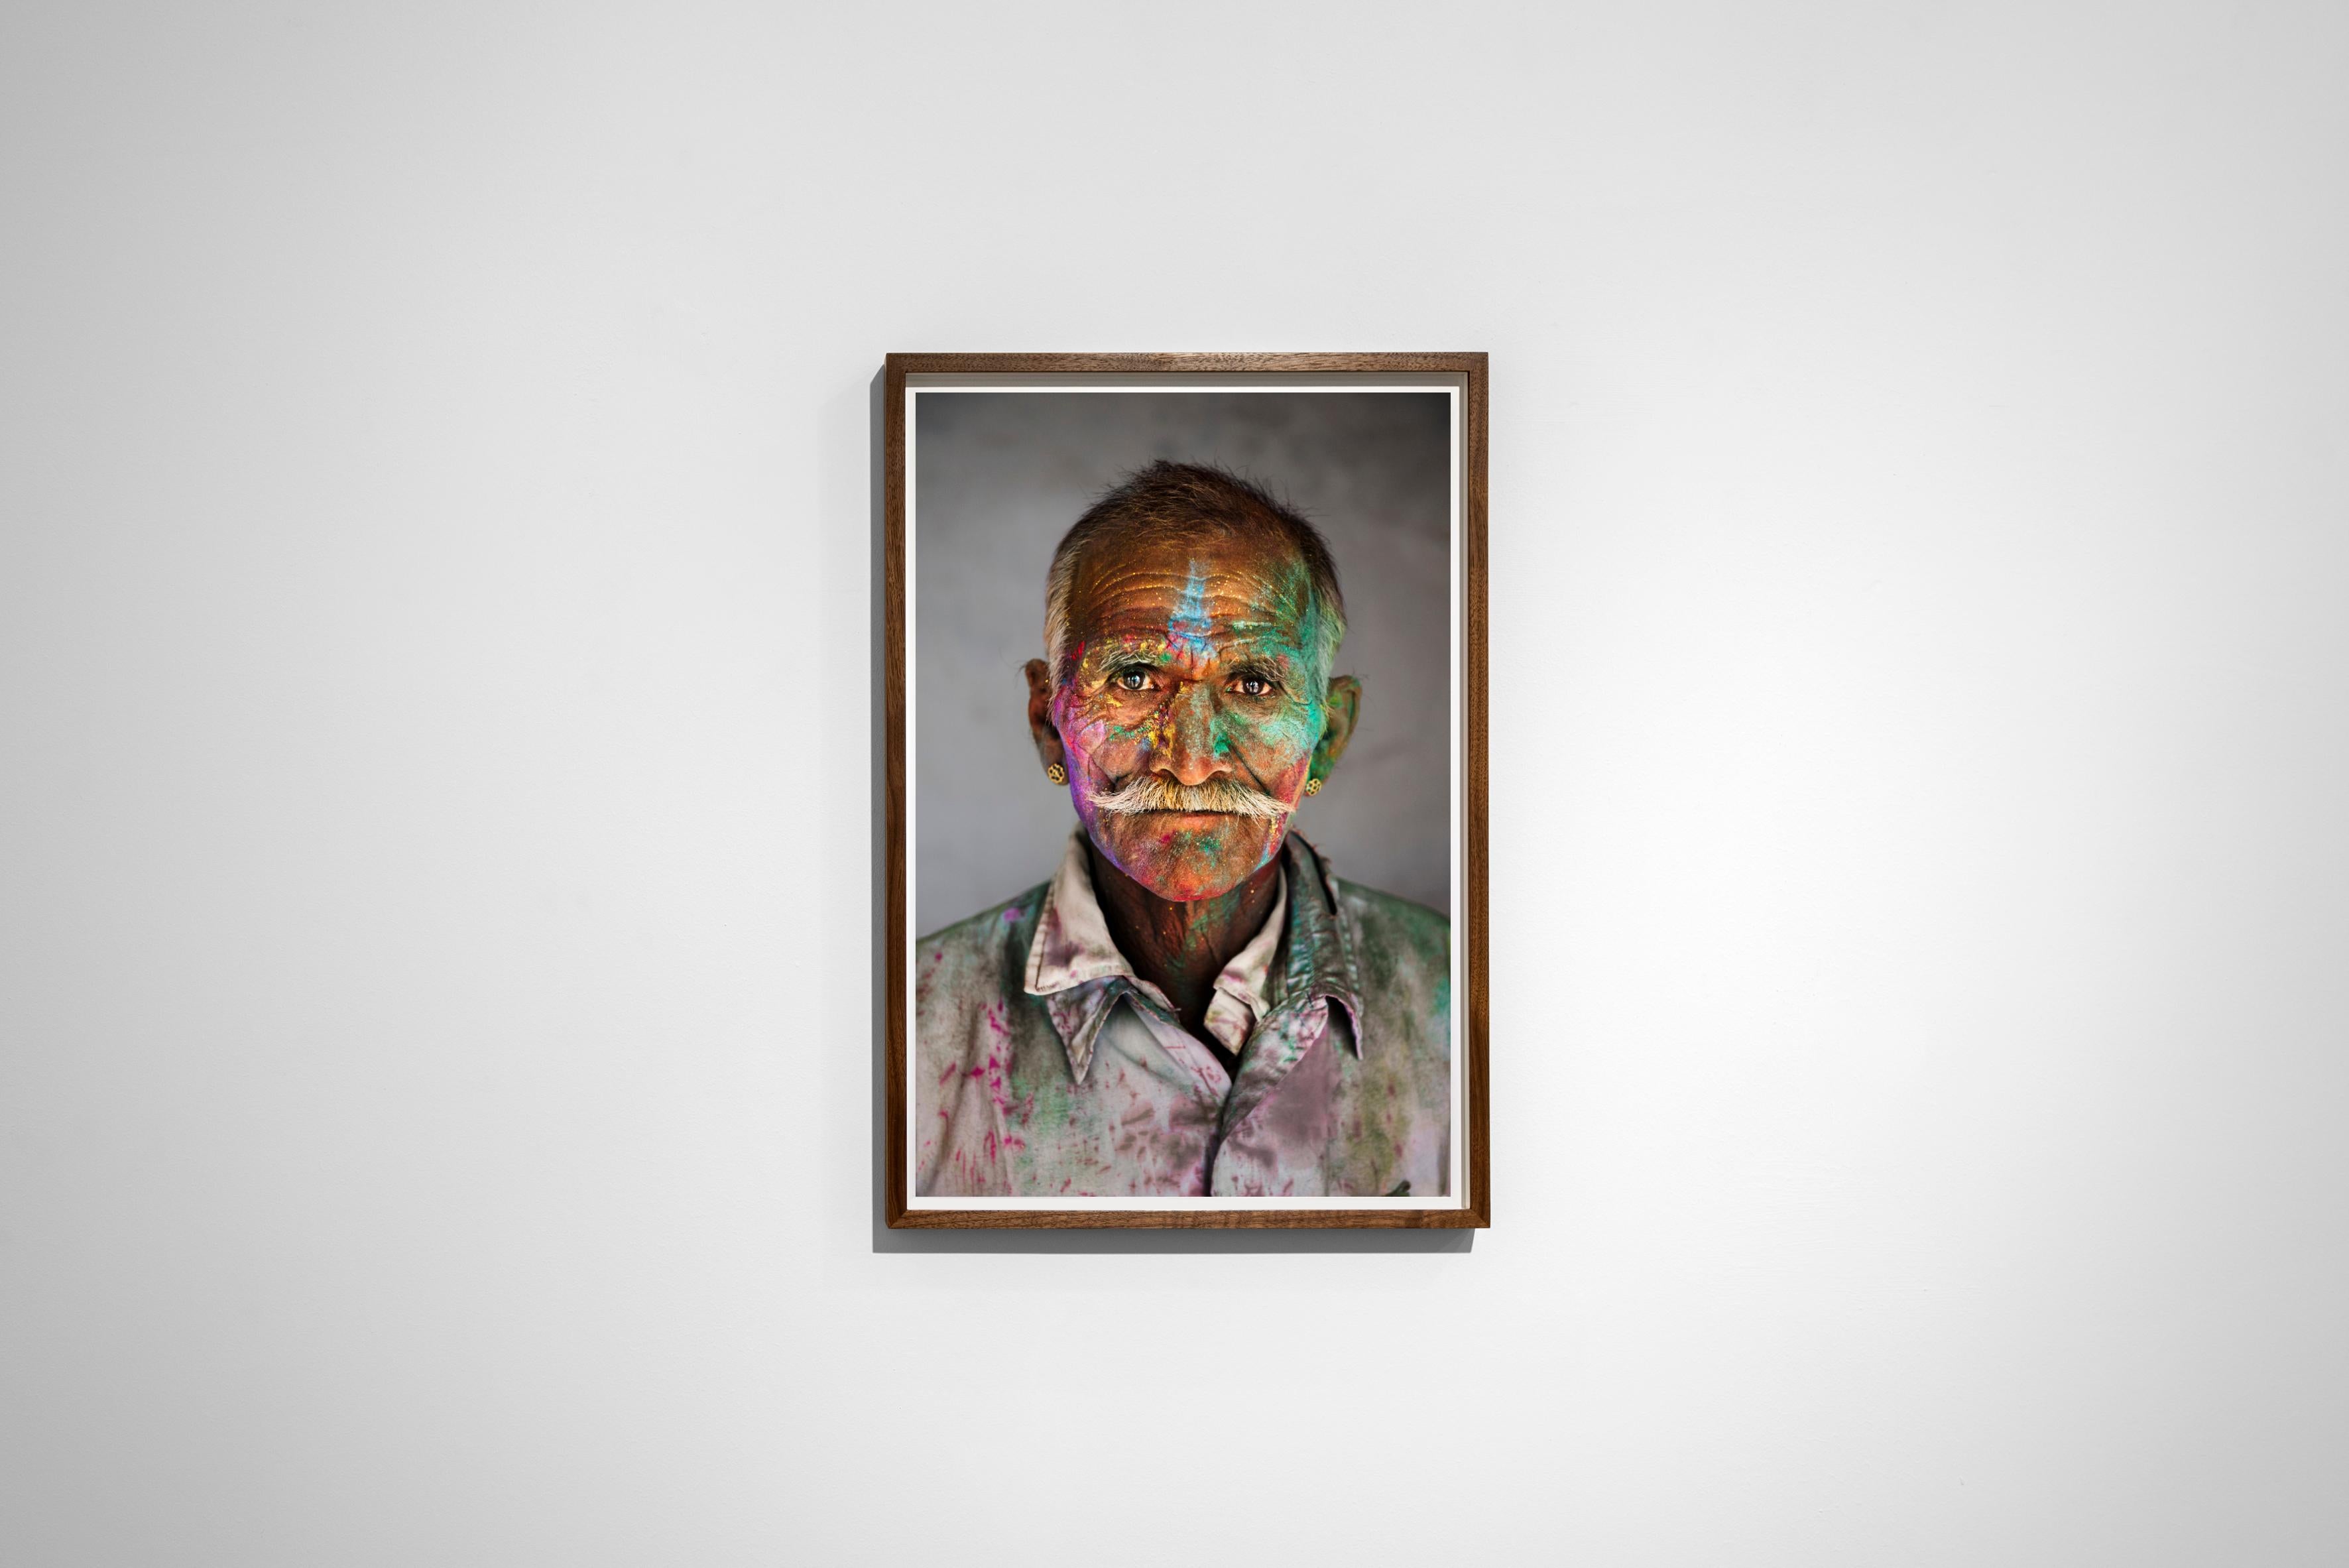 Man Covered in Powder, Rajasthan, Indien, 2009  - Steve McCurry  im Angebot 1